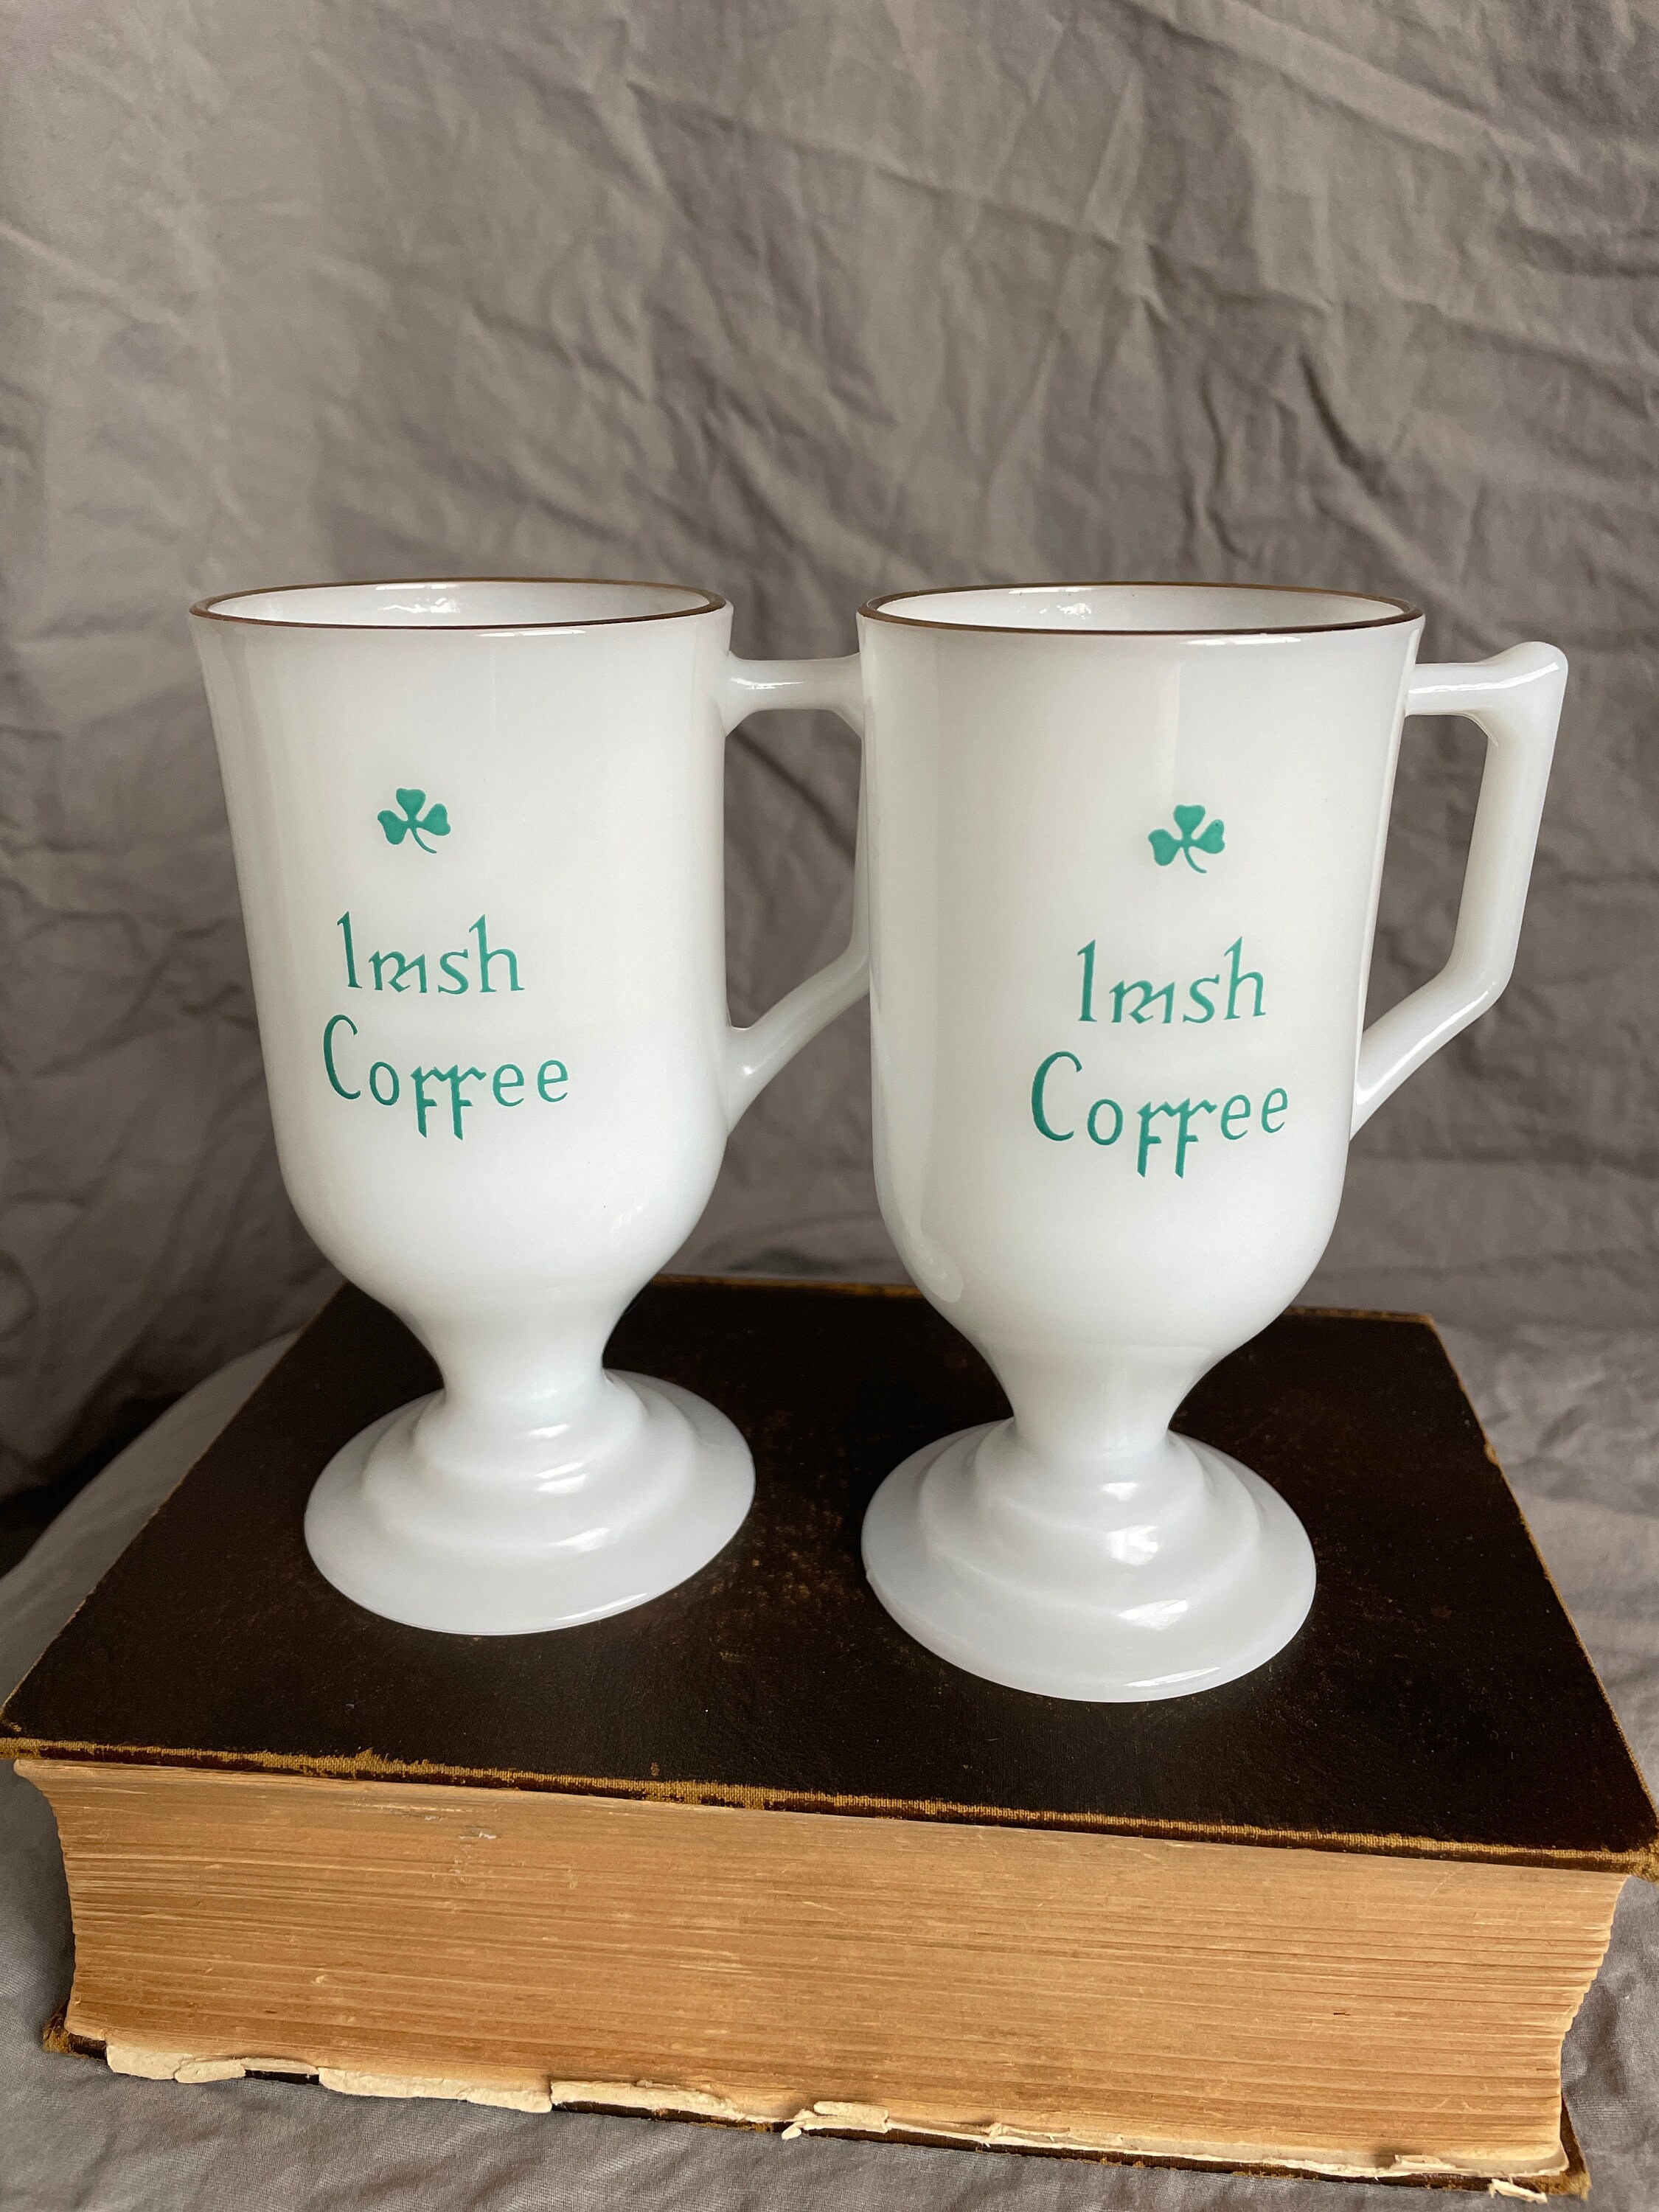 Vintage Irish Coffee Mugs With Drink Recipe Printed on Mugs (Set